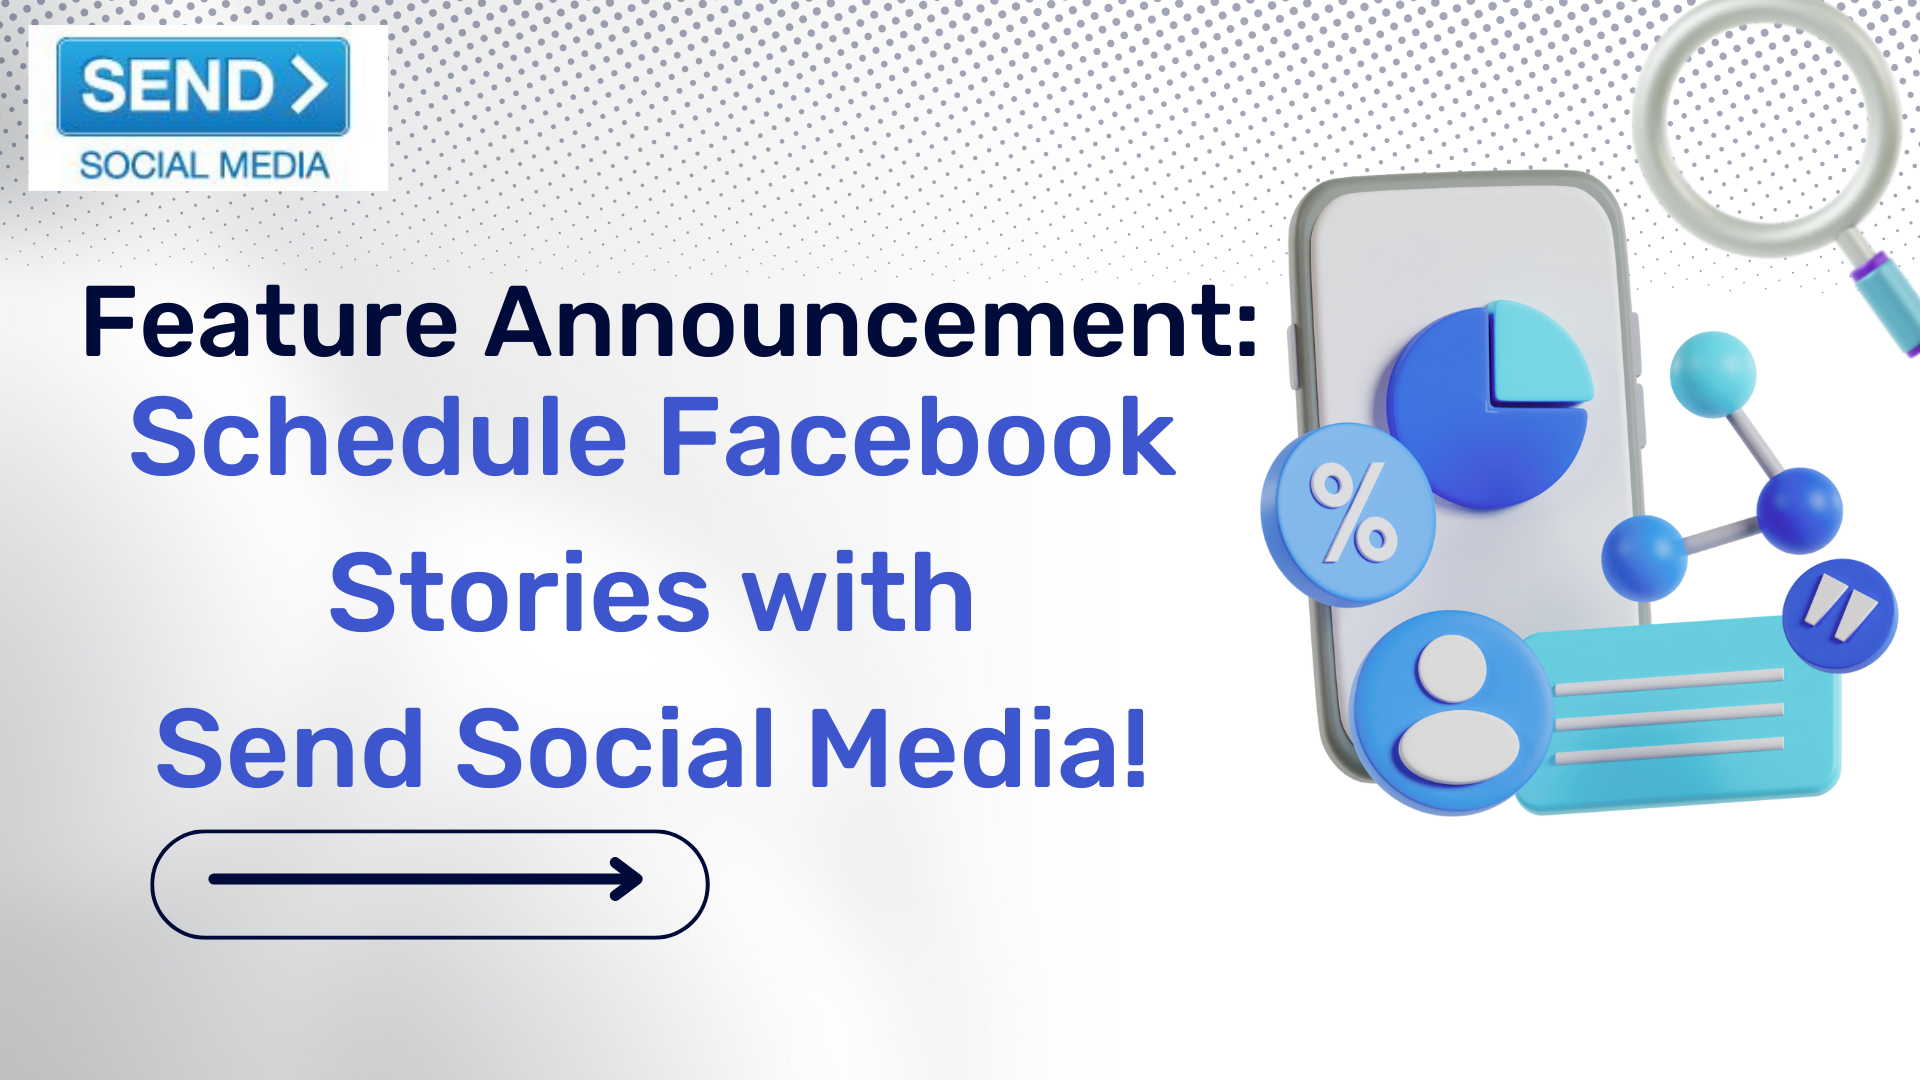 How Facebook Stories work on Send Social Media